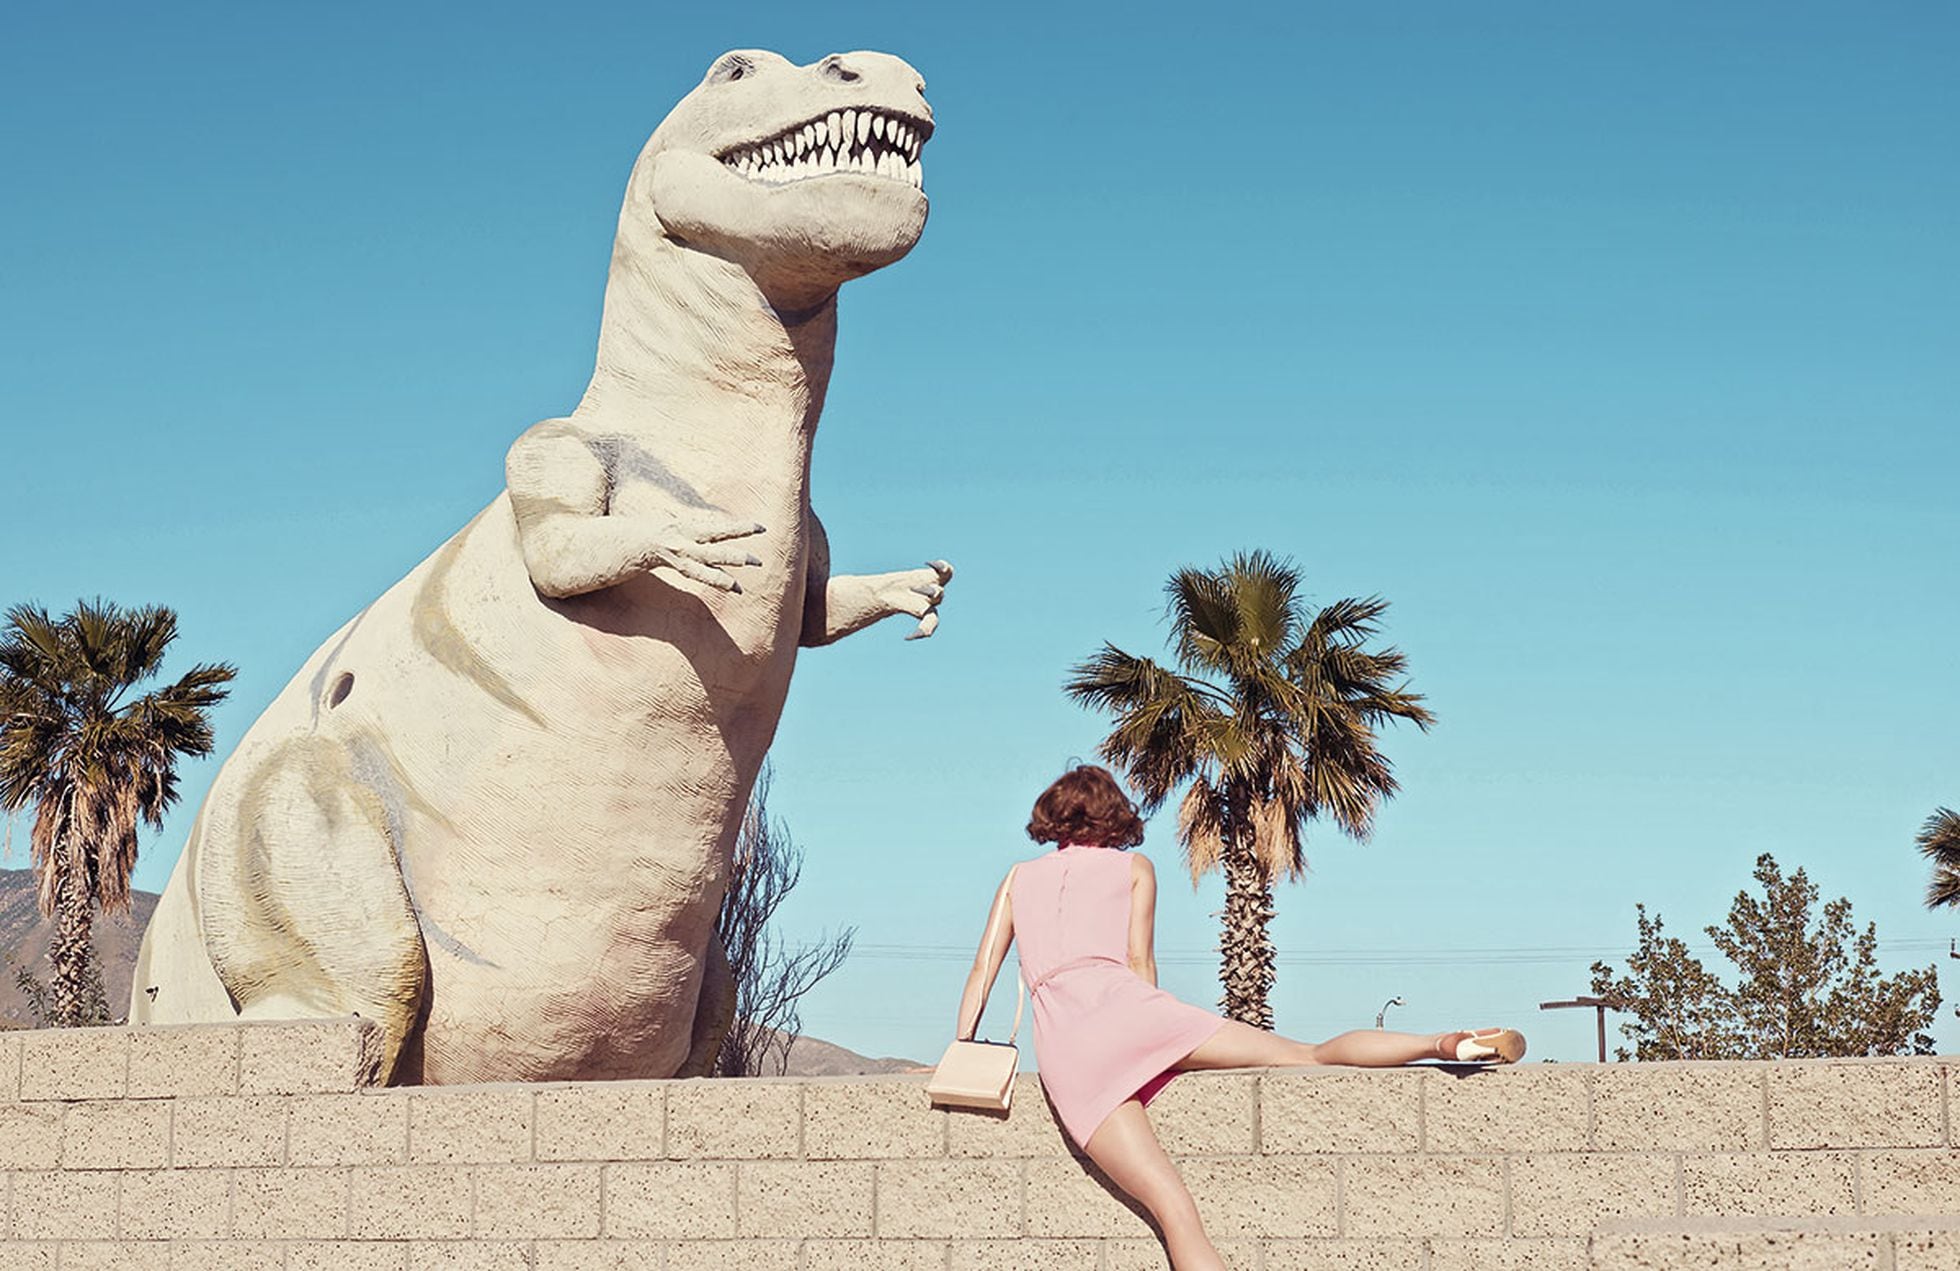 Godzilla, Tyrannosaurus rex and Raquel Welch's bikini: The